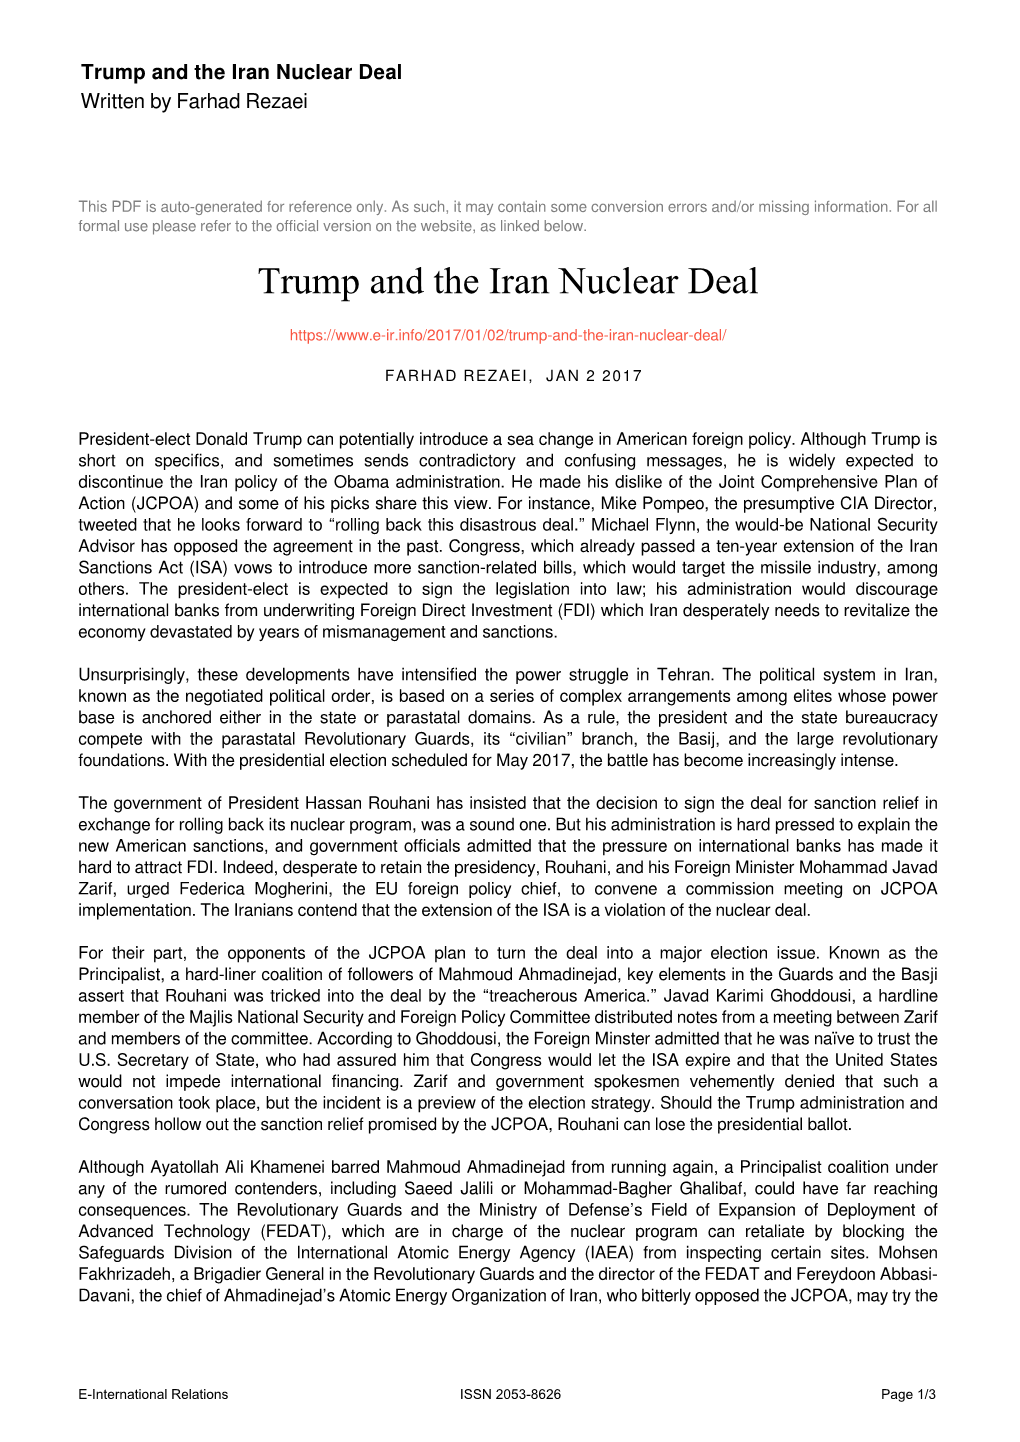 Trump and the Iran Nuclear Deal Written by Farhad Rezaei